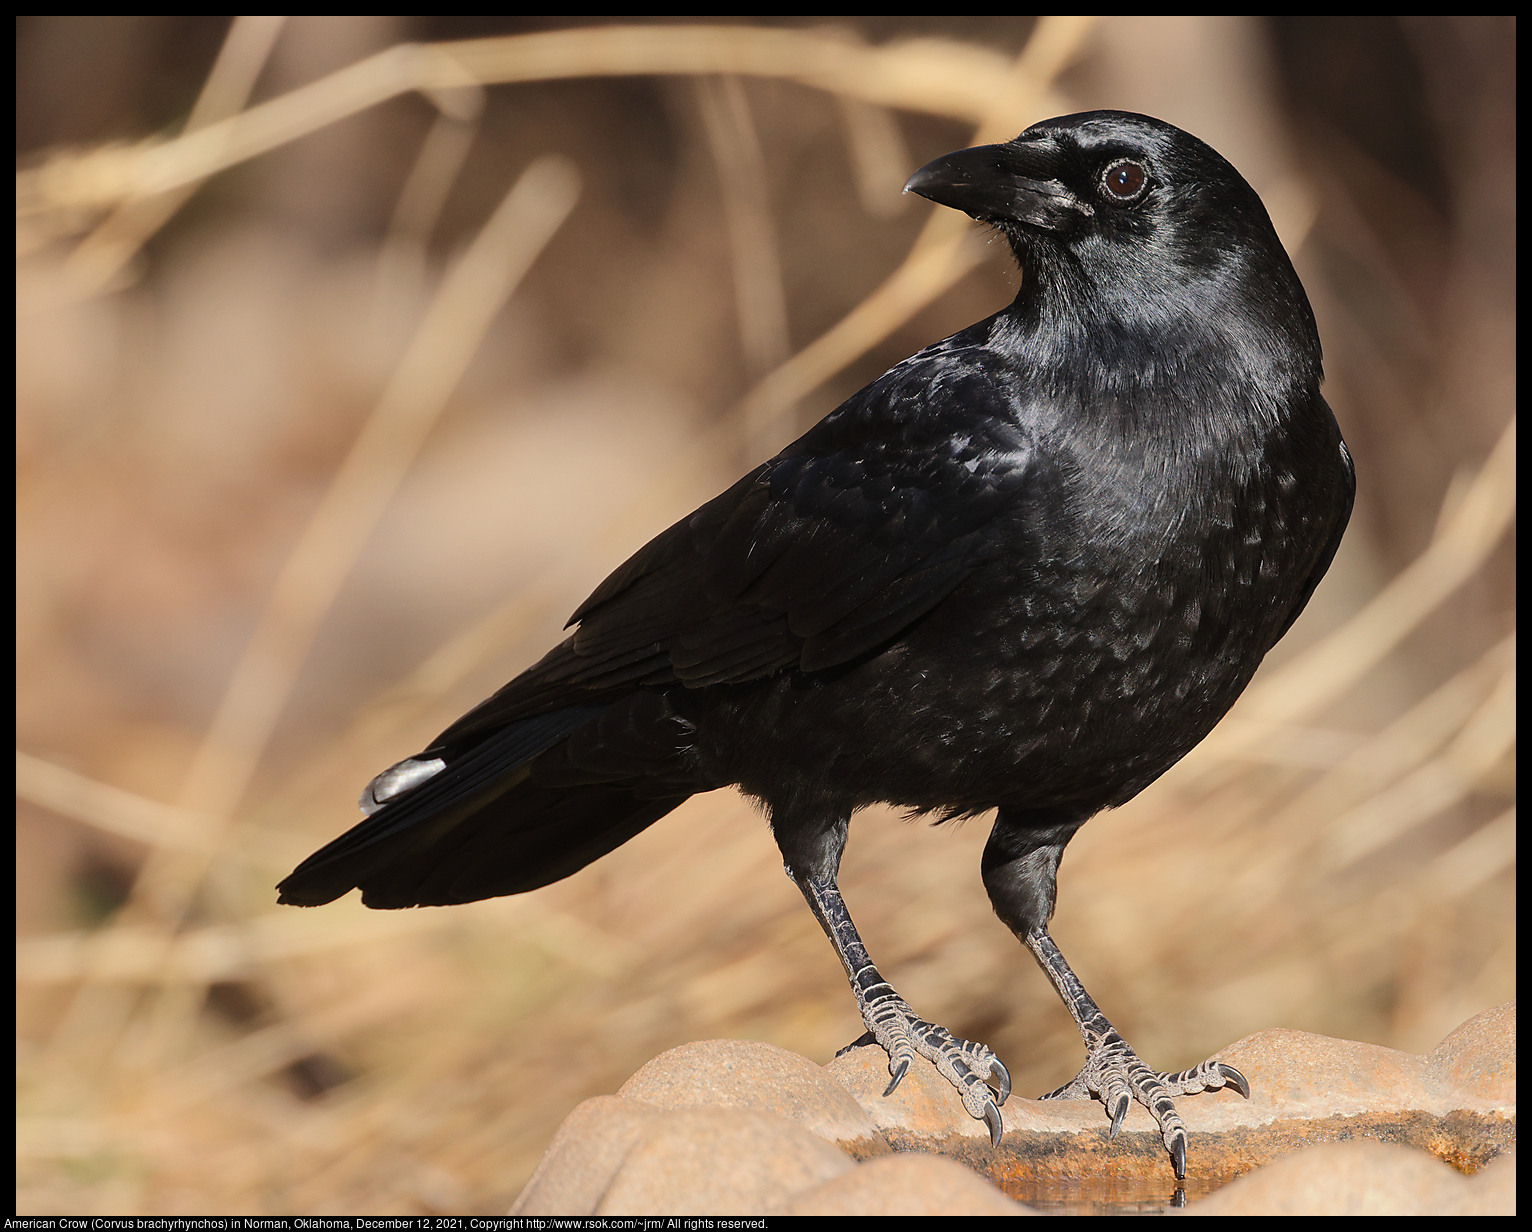 American Crow (Corvus brachyrhynchos) in Norman, Oklahoma, December 12, 2021